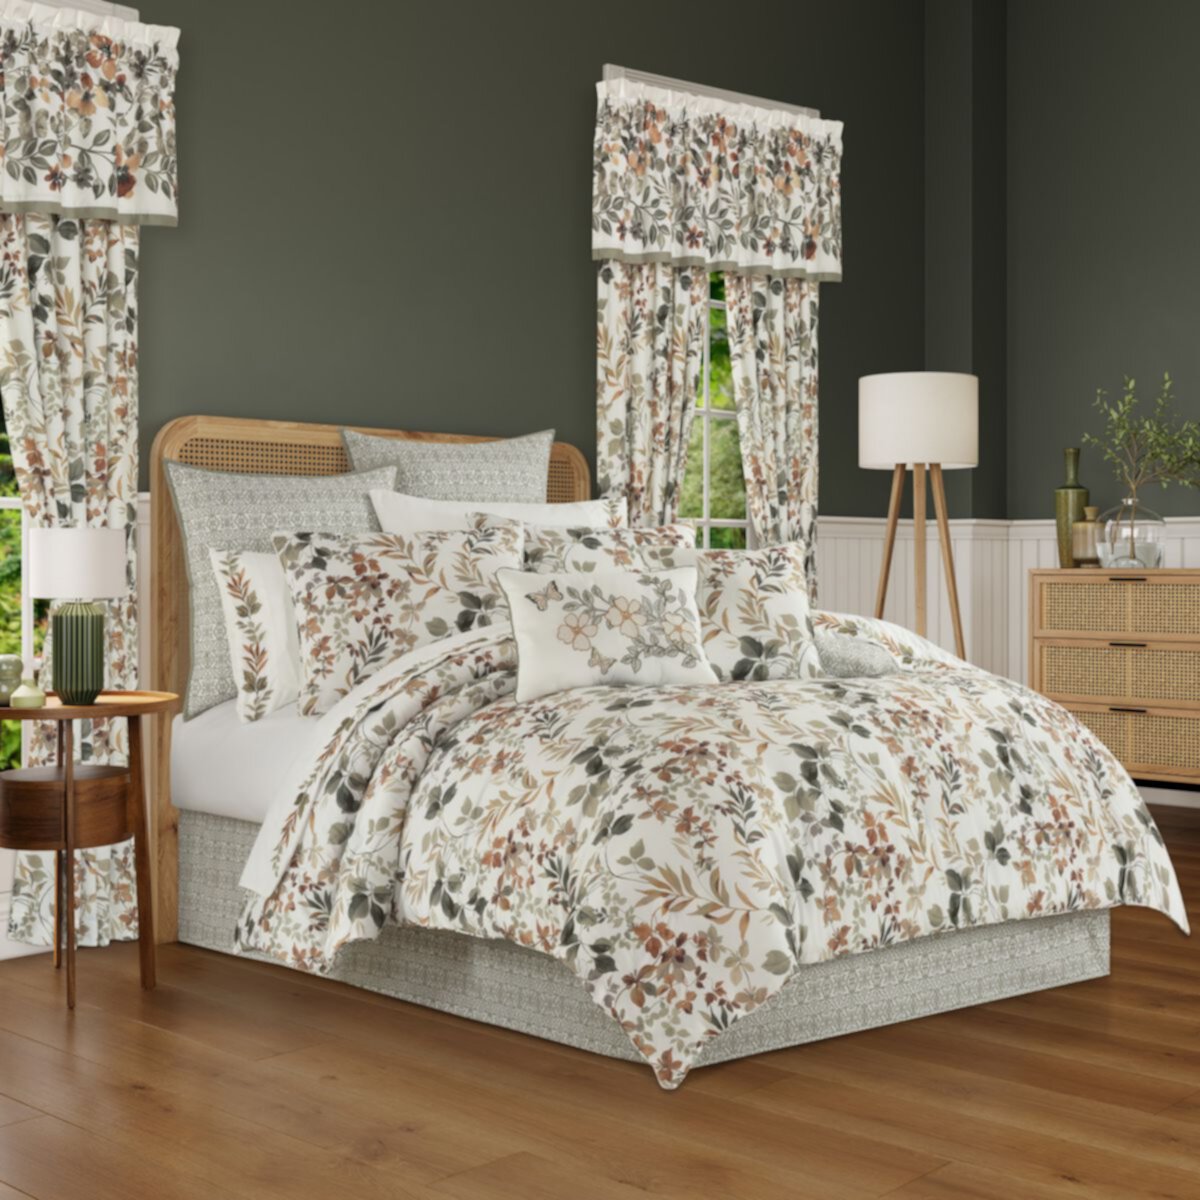 Royal Court Evergreen 4-piece Comforter and Euro Sham Set Royal Court